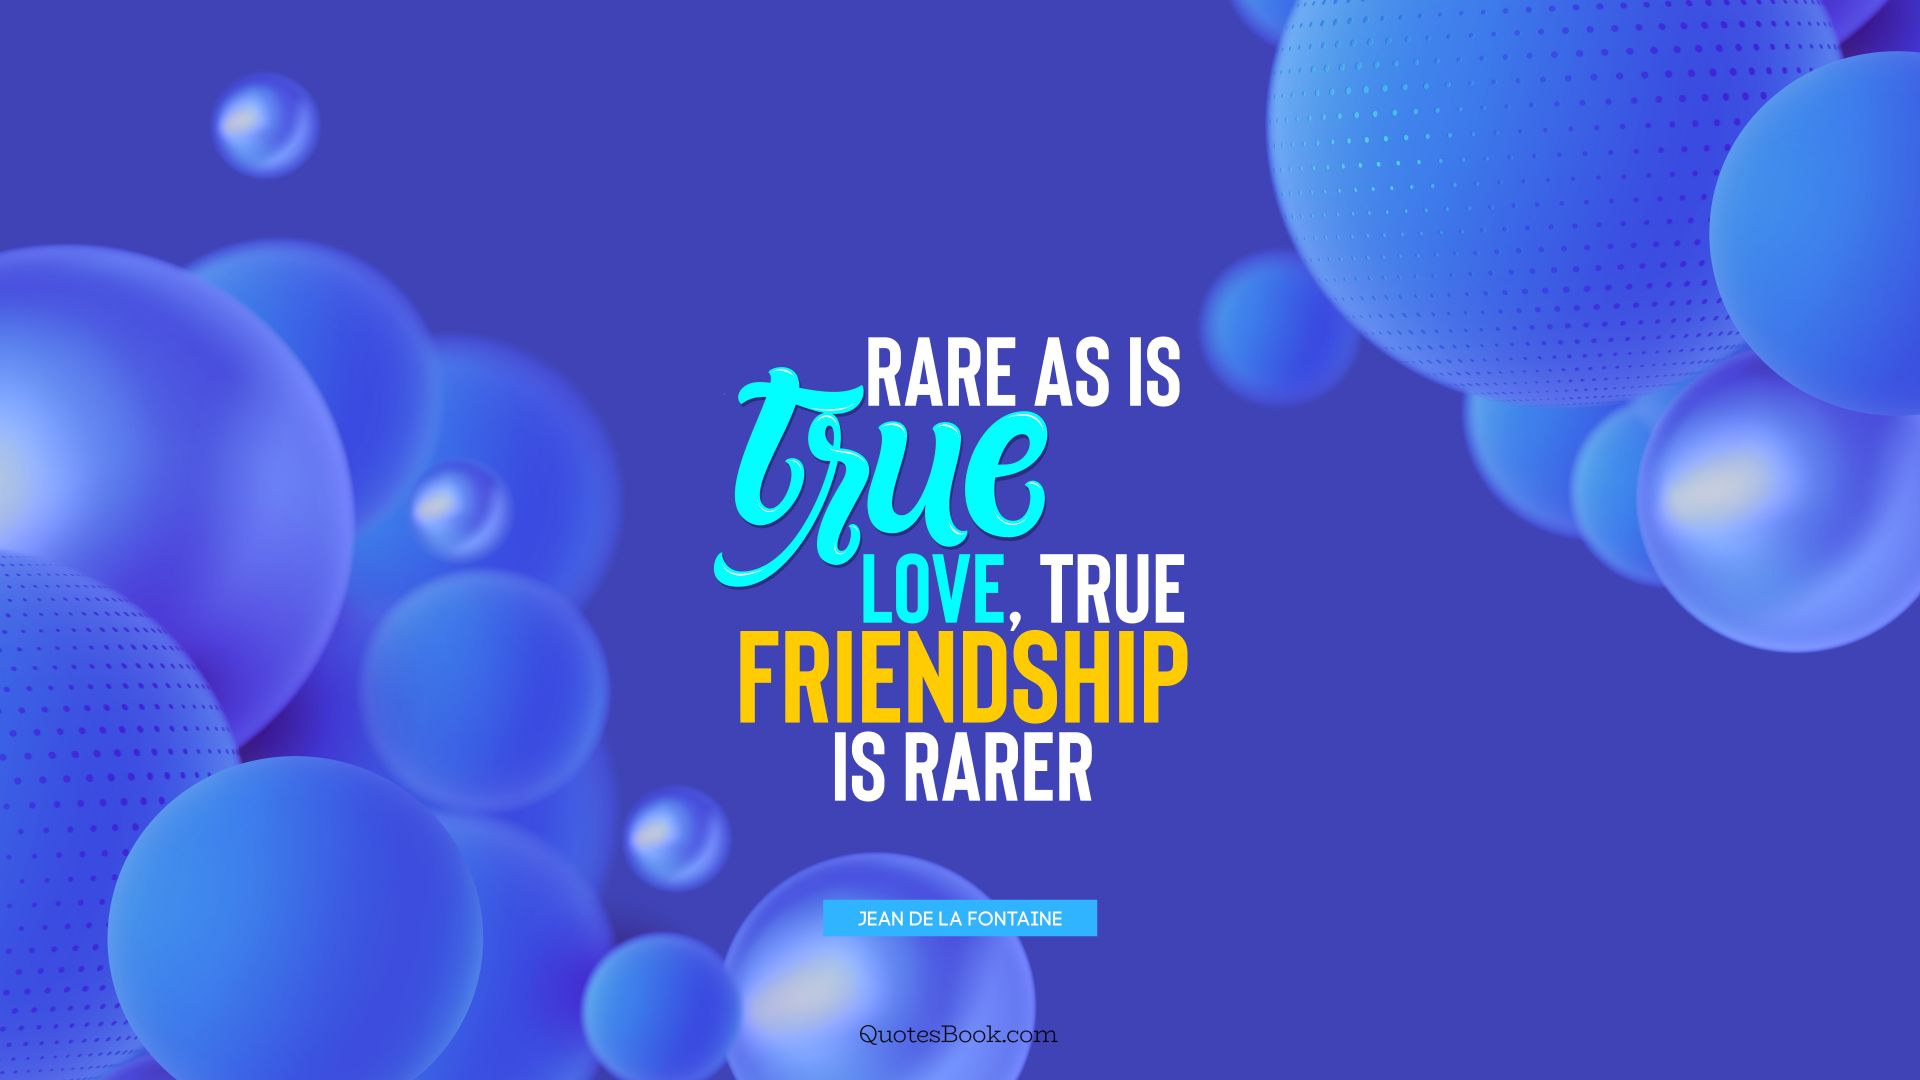 Rare as is true love, true friendship is rarer. - Quote by Jean de La Fontaine